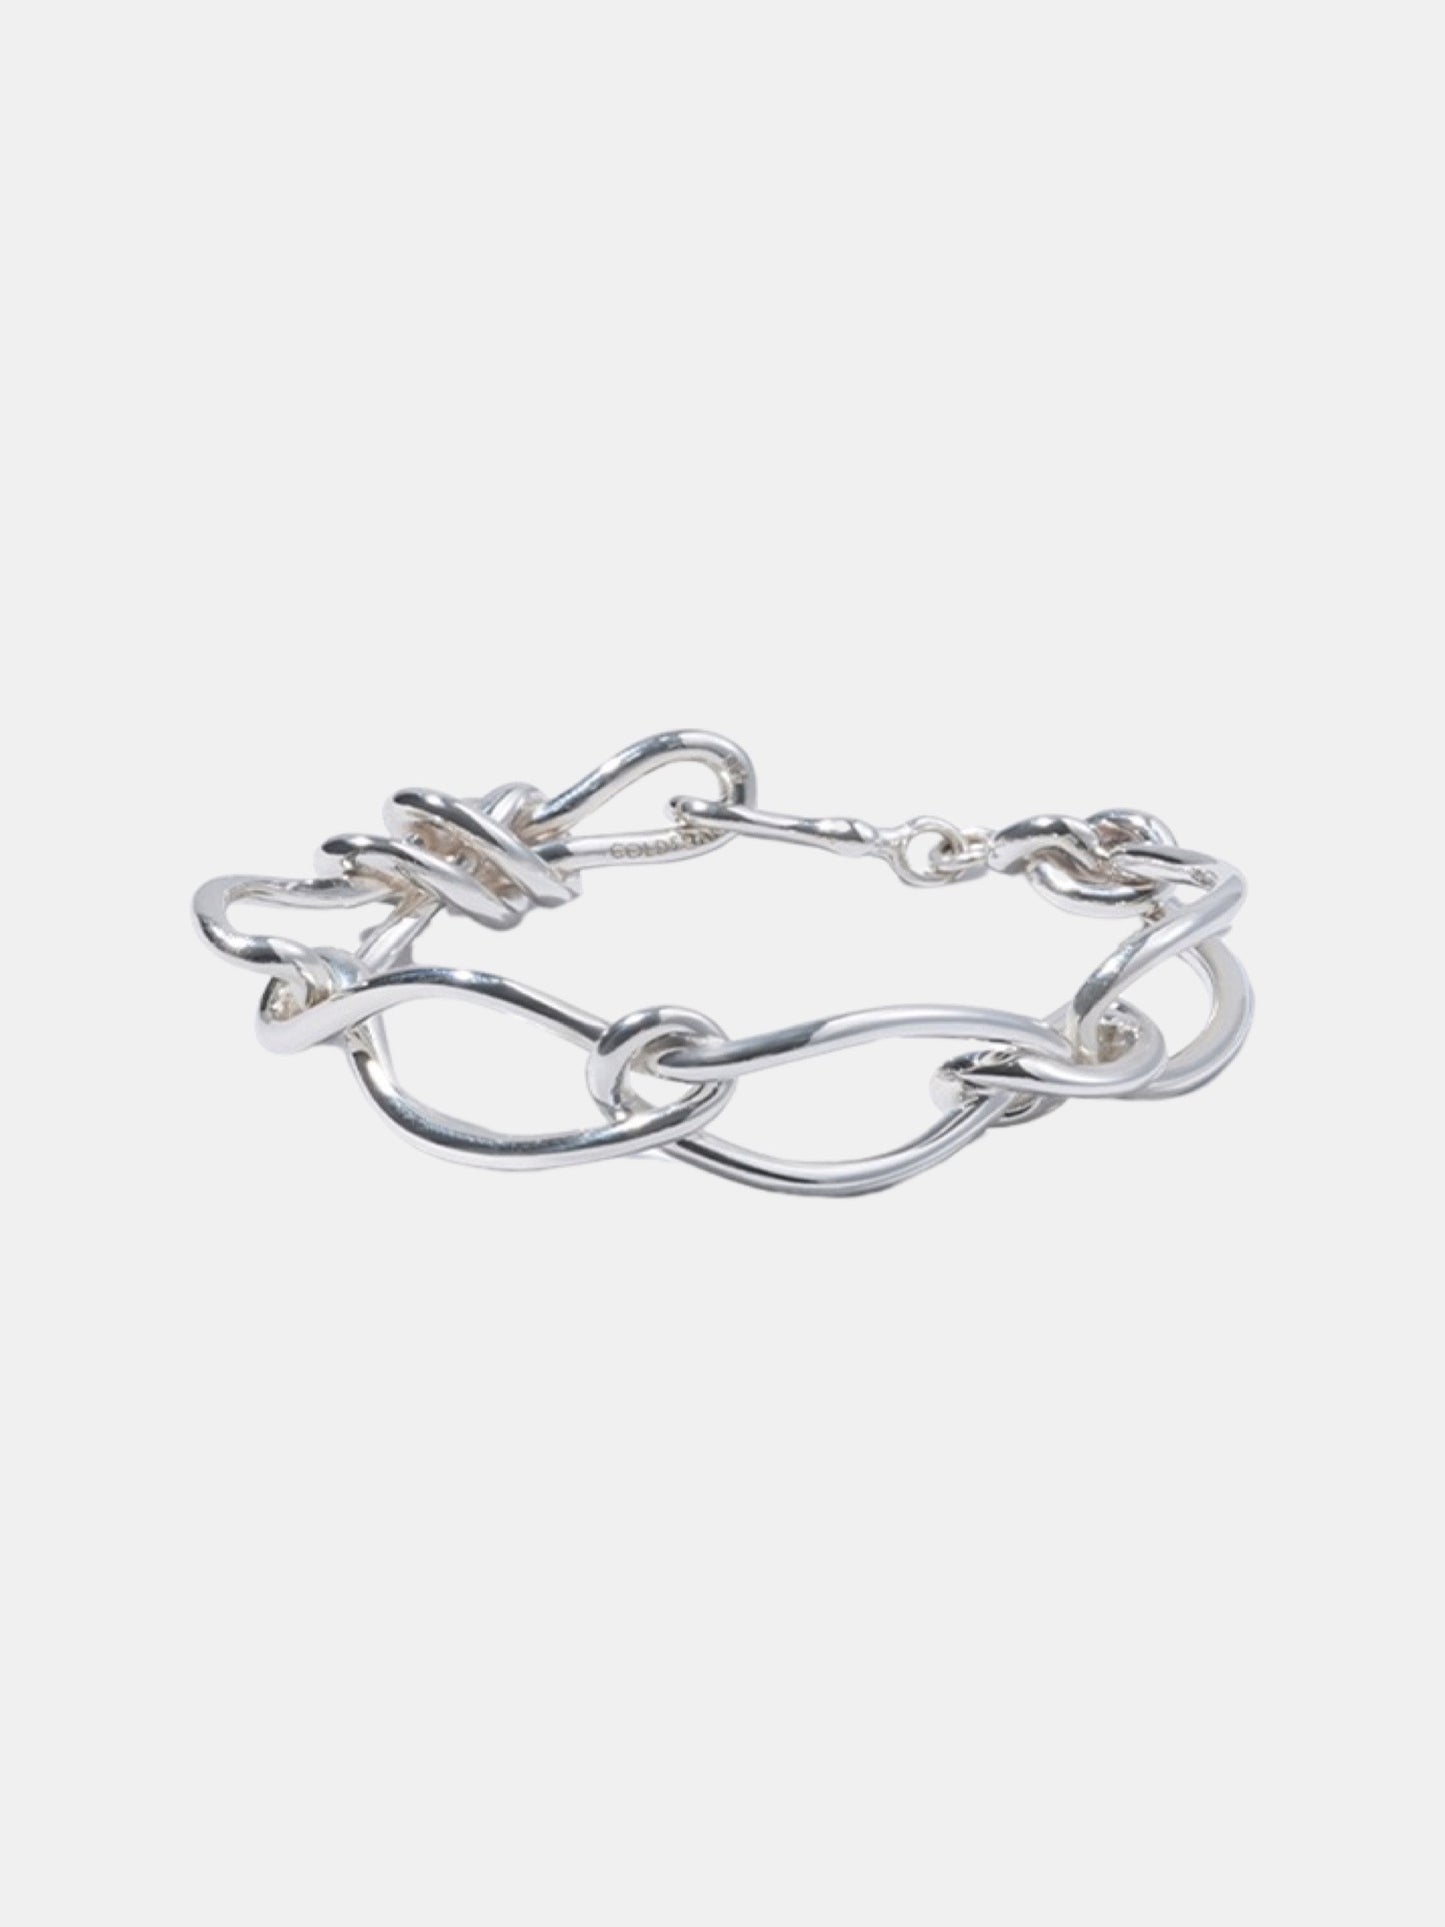 Boldly Curved Loose Knots Bracelet